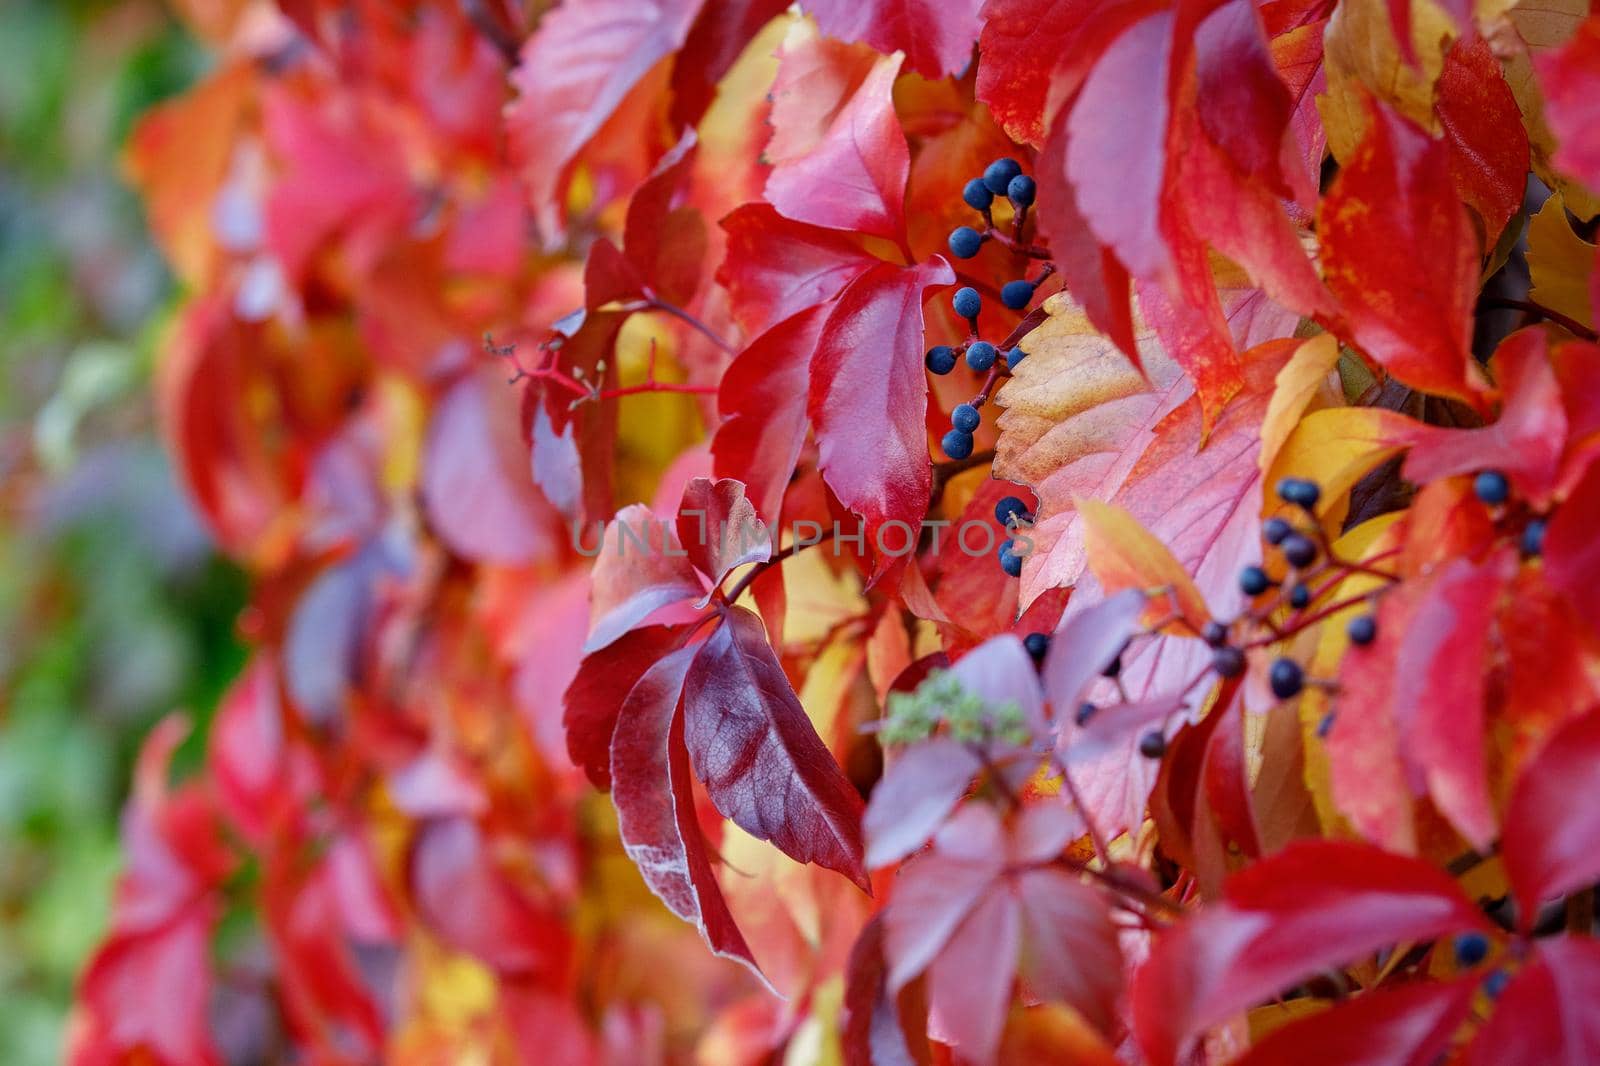 Beautiful virginia creeper foliage with berries in autumn.